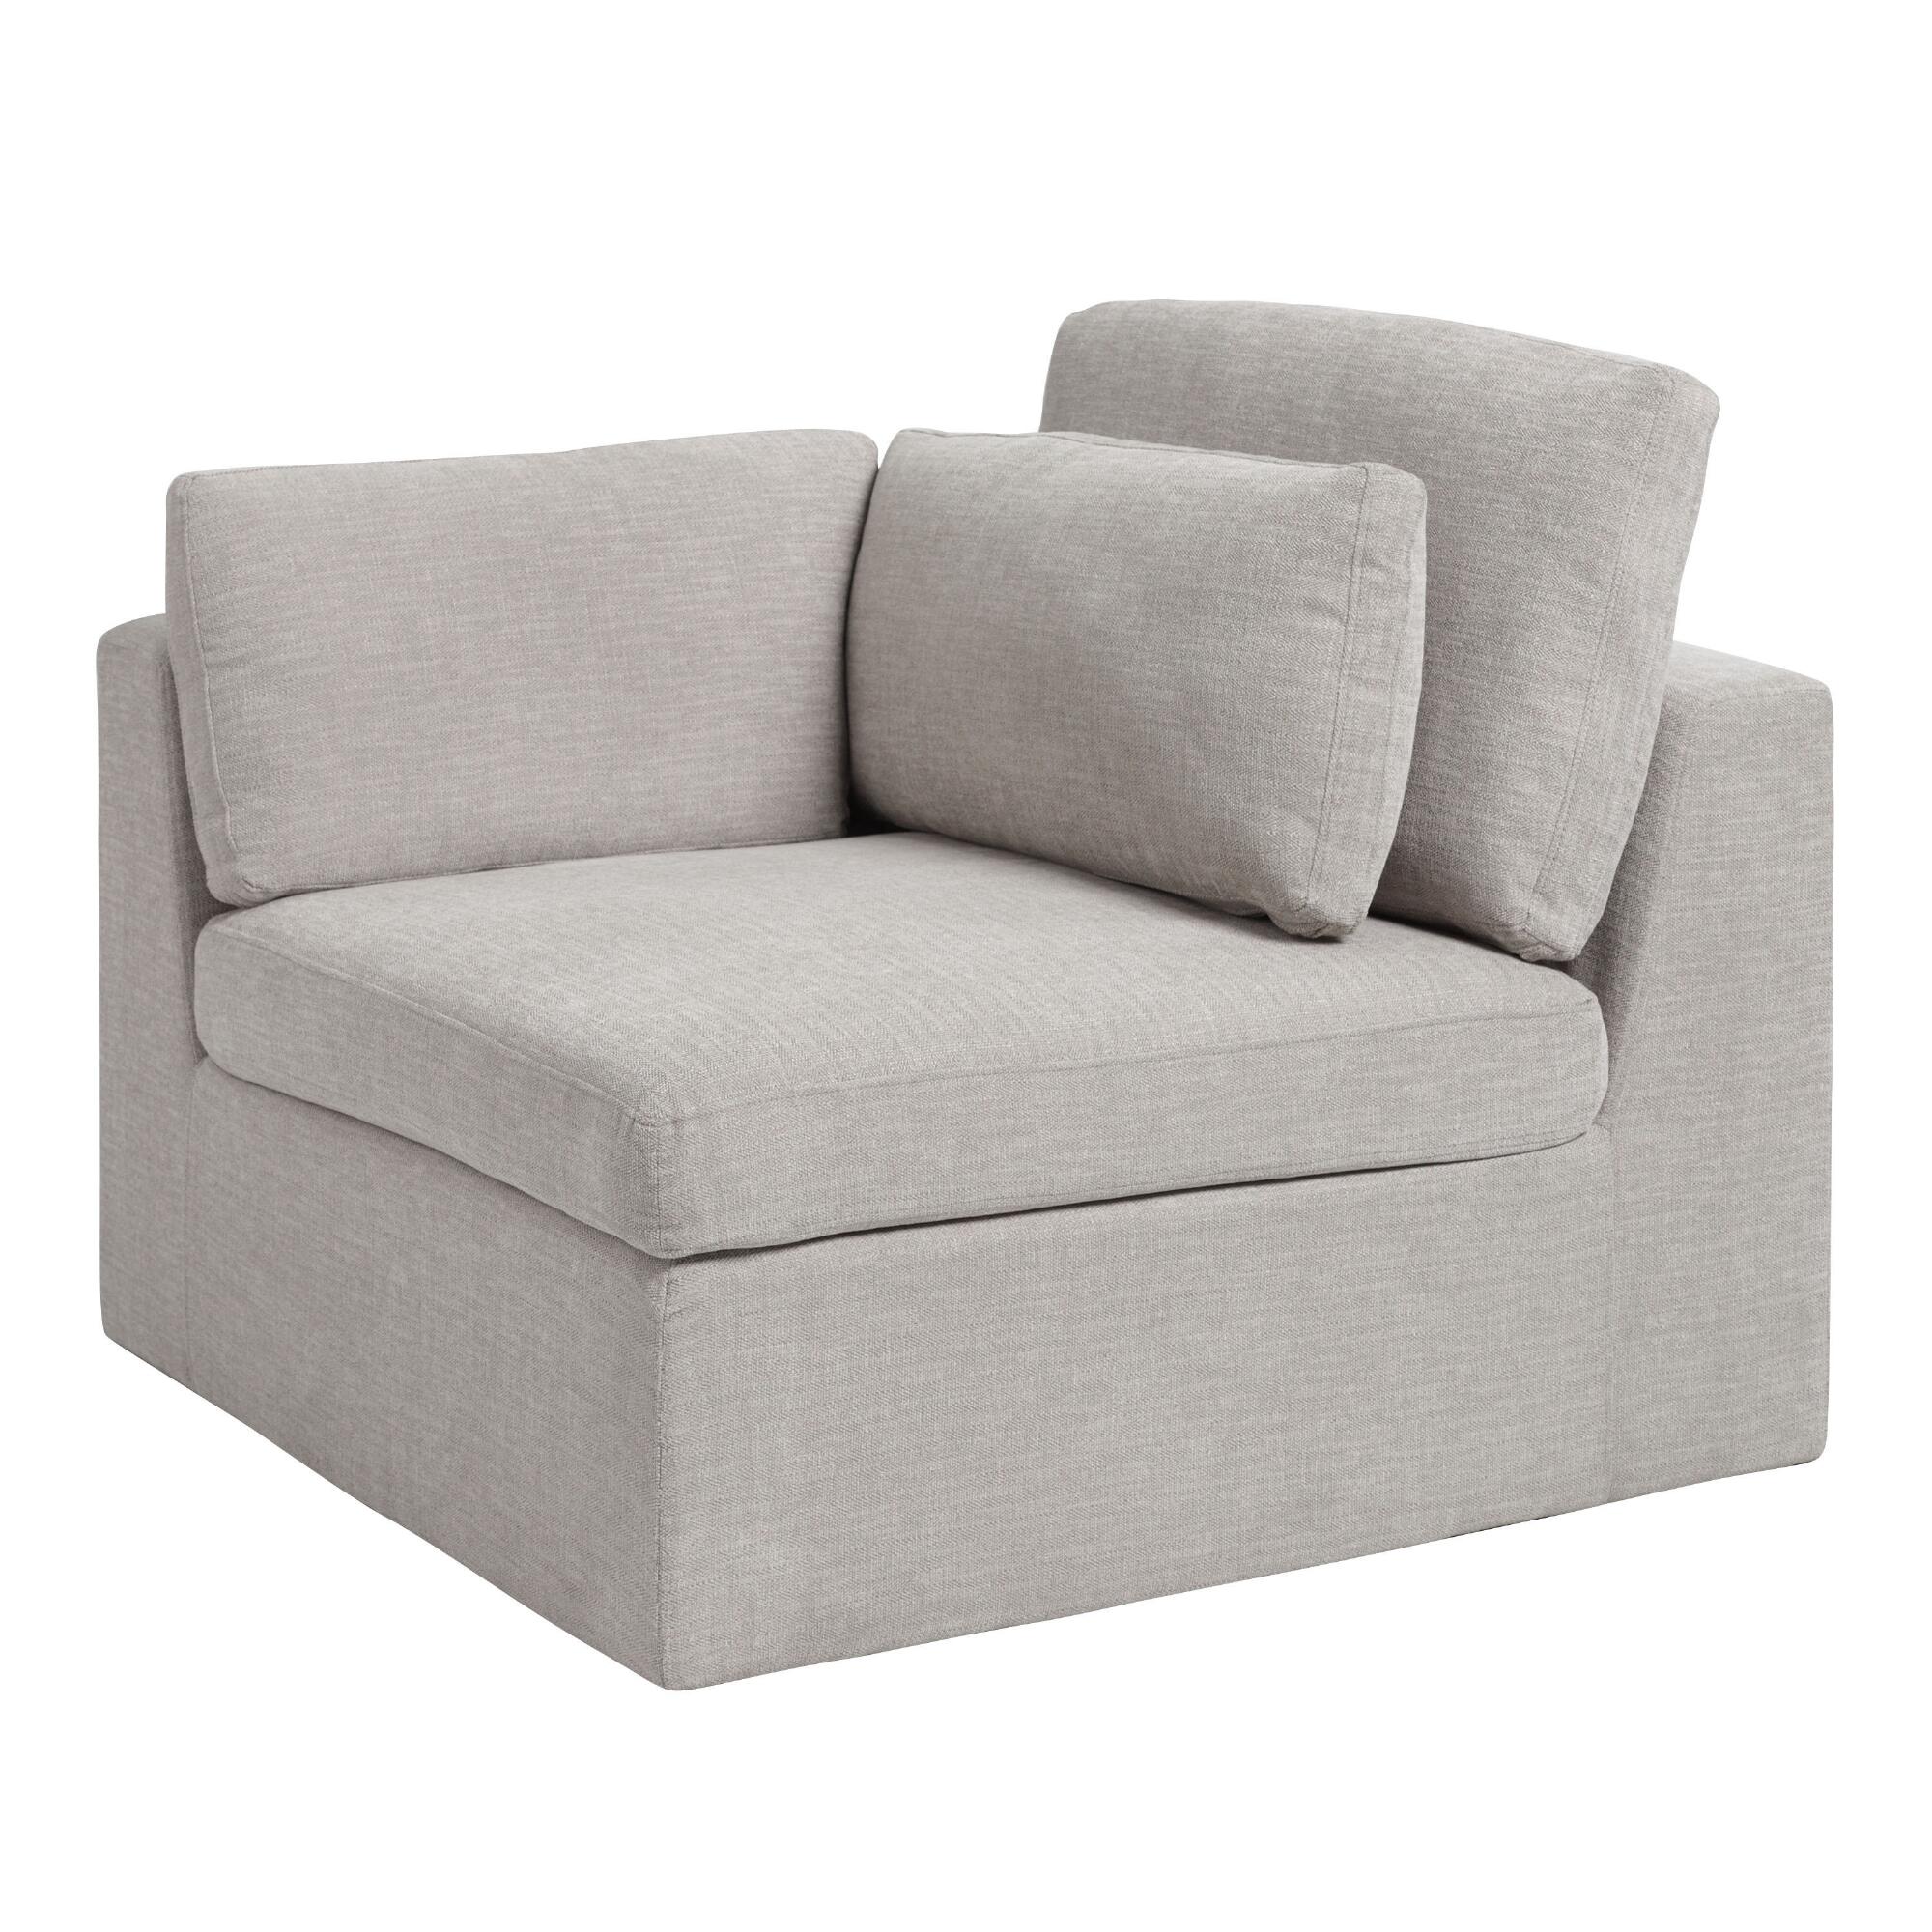 Gray Emmett Modular Sectional End Chair - Polyester by World Market